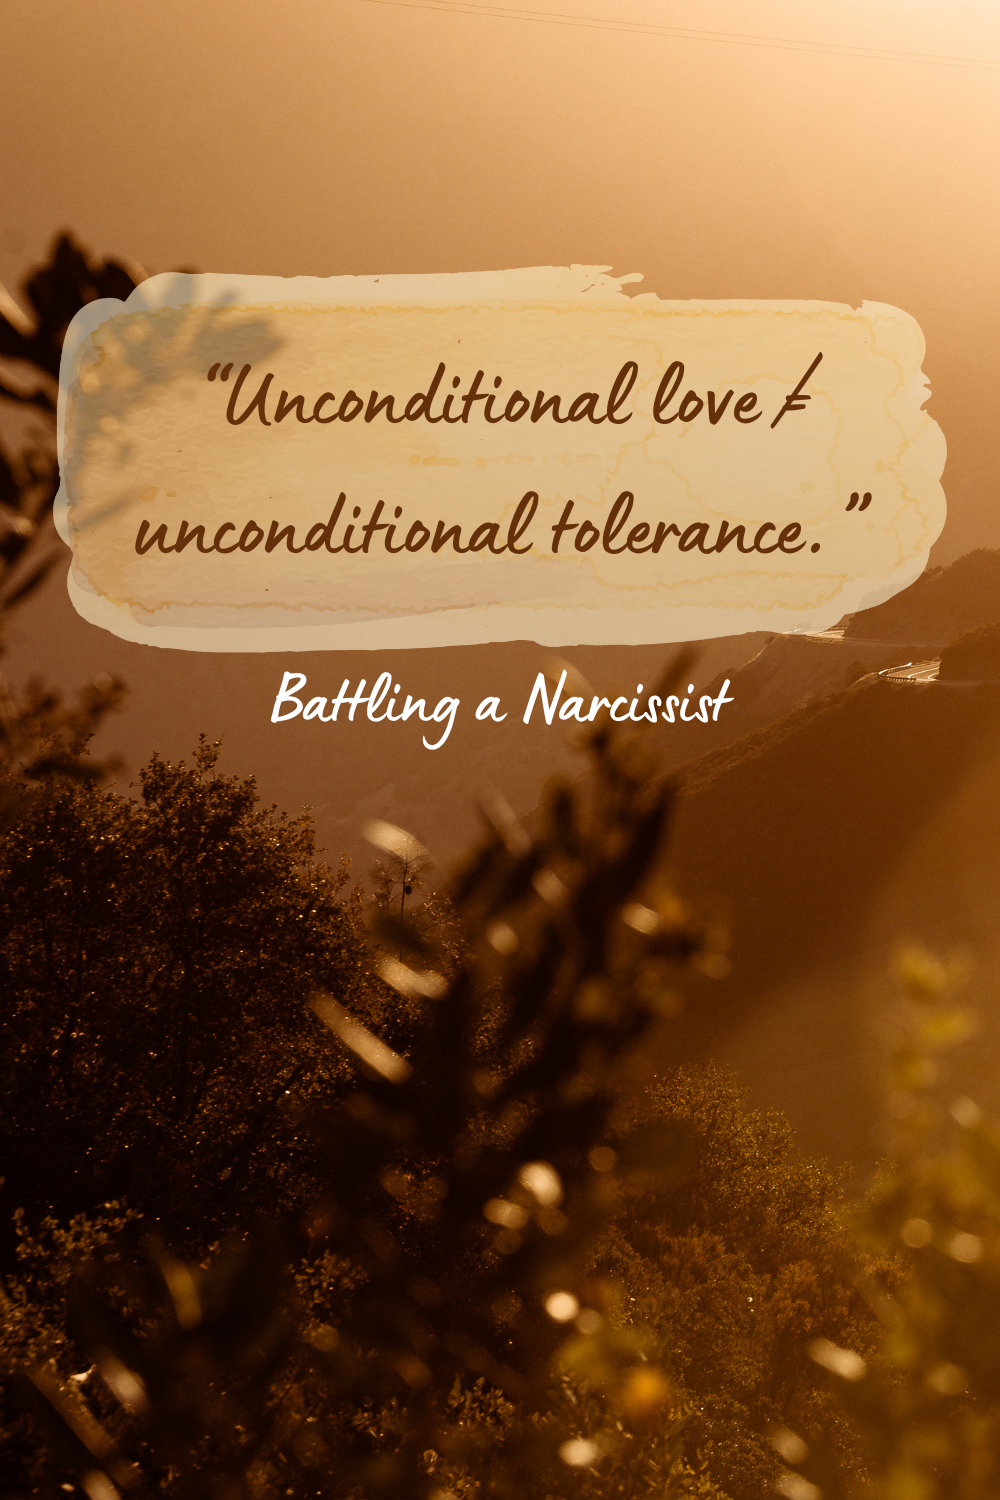 “Unconditional love ≠ unconditional tolerance.”